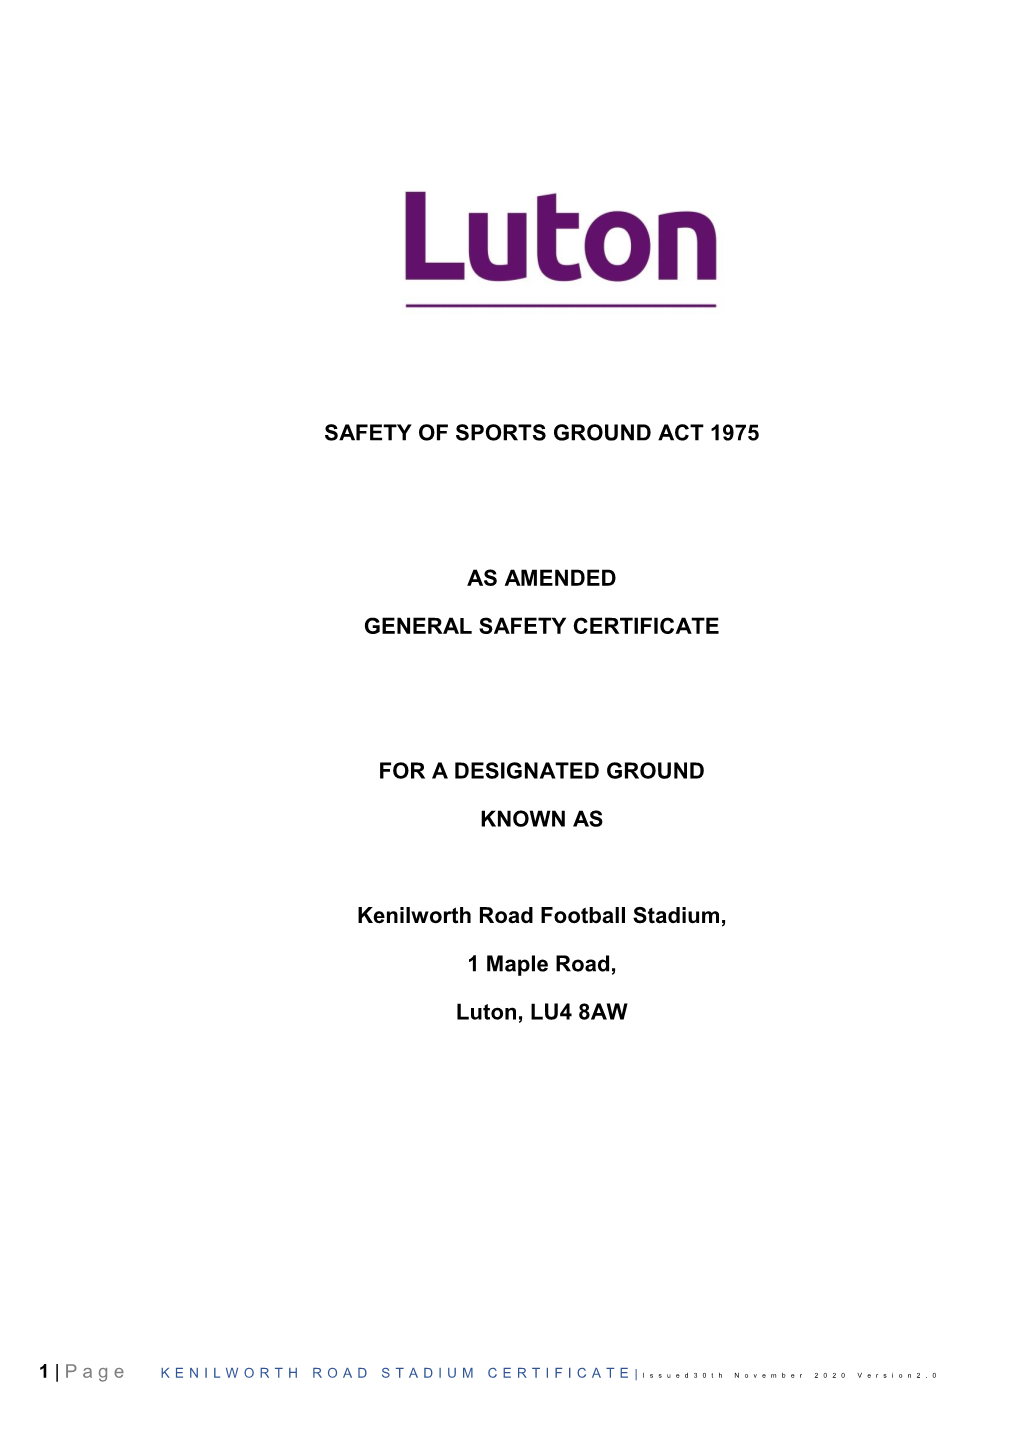 Kenilworth Road Stadium Safety Certificate